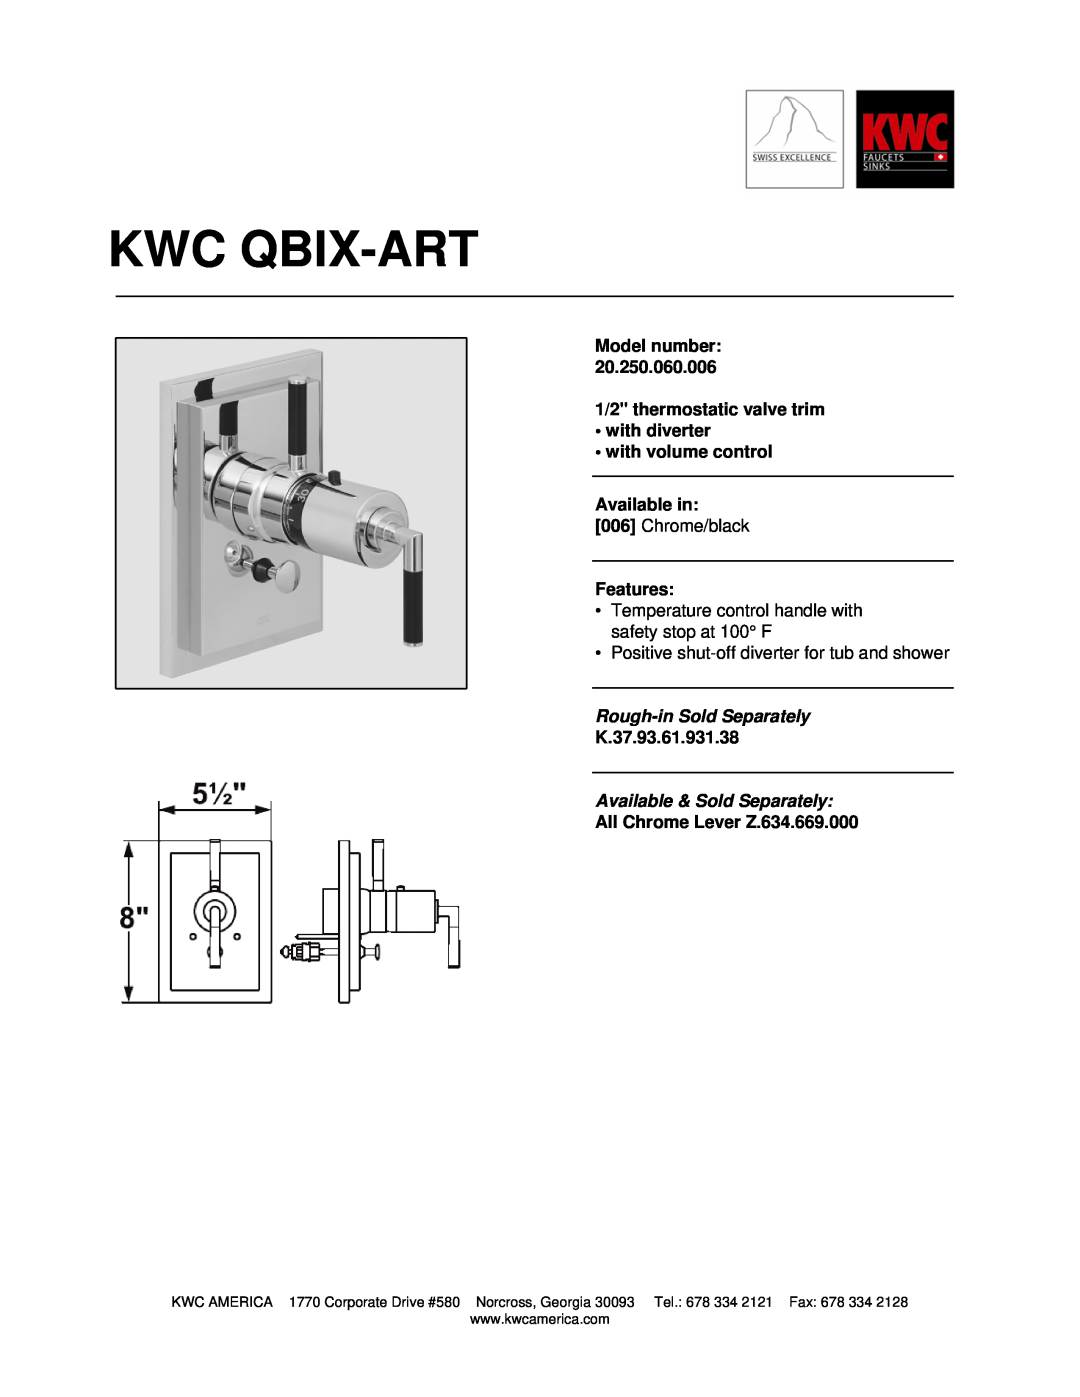 KWC 20.250.060.006 manual Kwc Qbix-Art, Model number 1/2 thermostatic valve trim, with diverter with volume control 